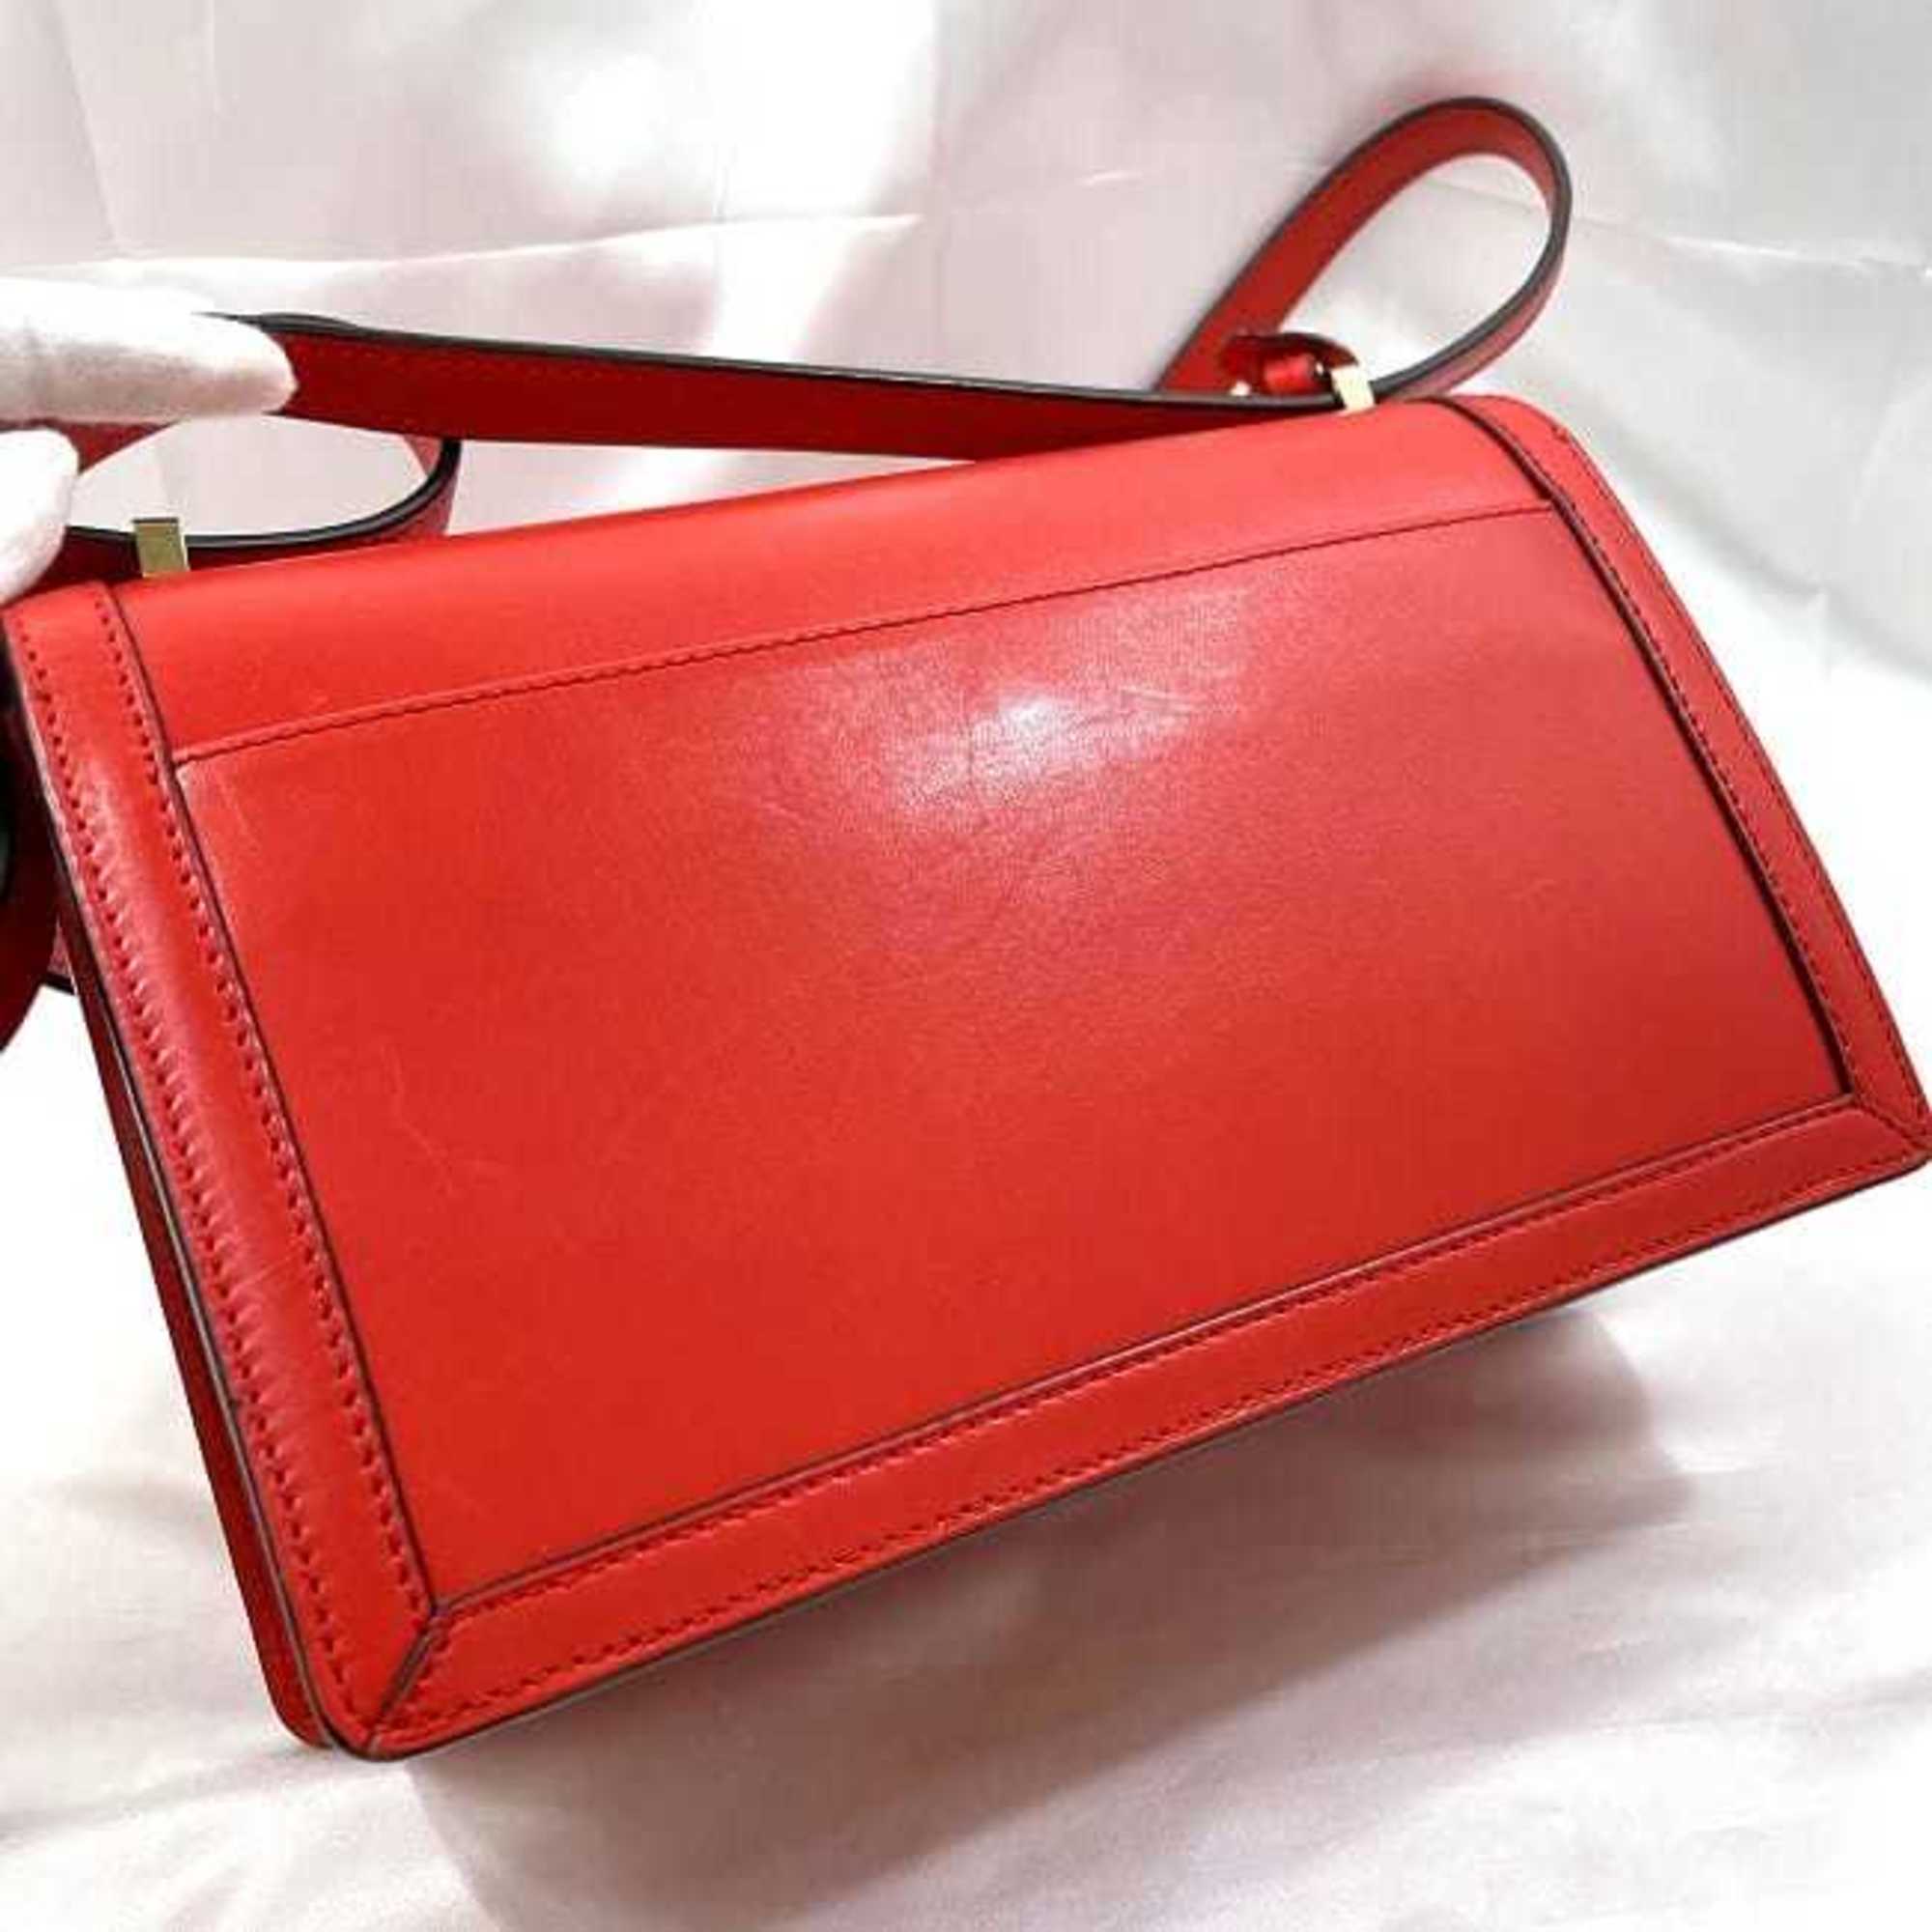 LOEWE Shoulder Bag Barcelona Red f-19948 Flap Leather Women's Compact